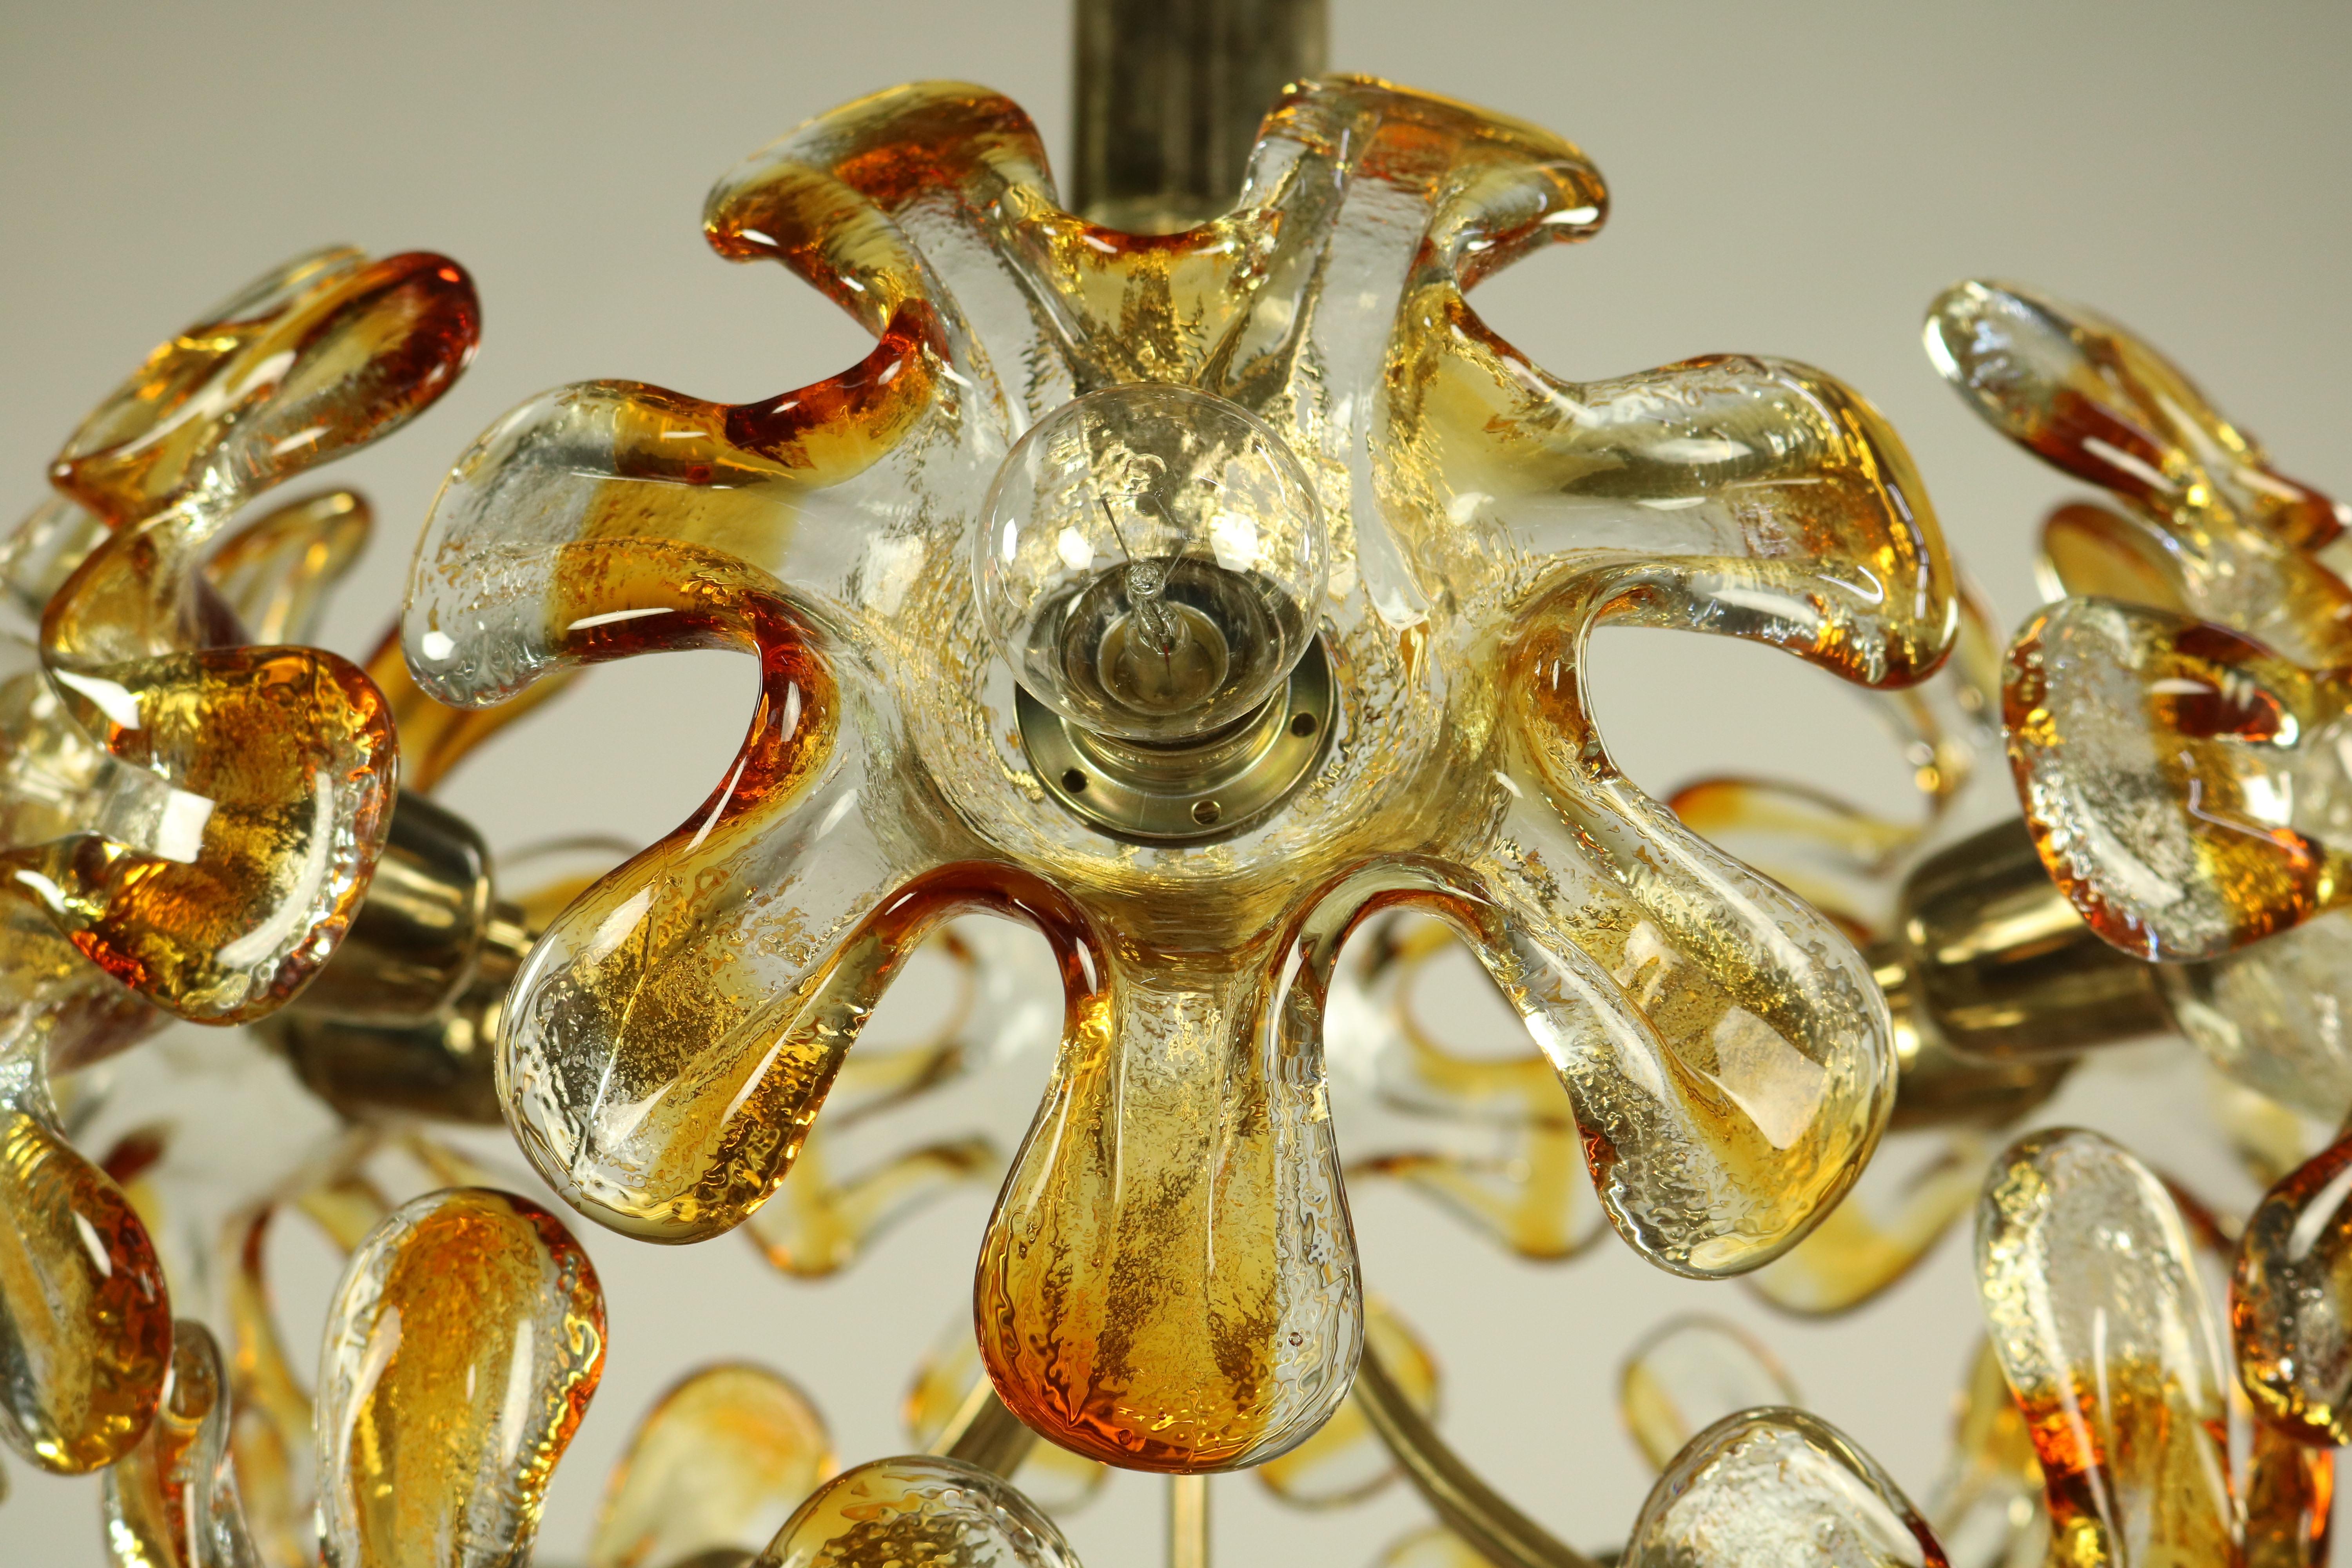 Mid-20th Century Mazzega Murano Glass Flower or Blossom Chandelier 11 Light Pendant Lamp For Sale